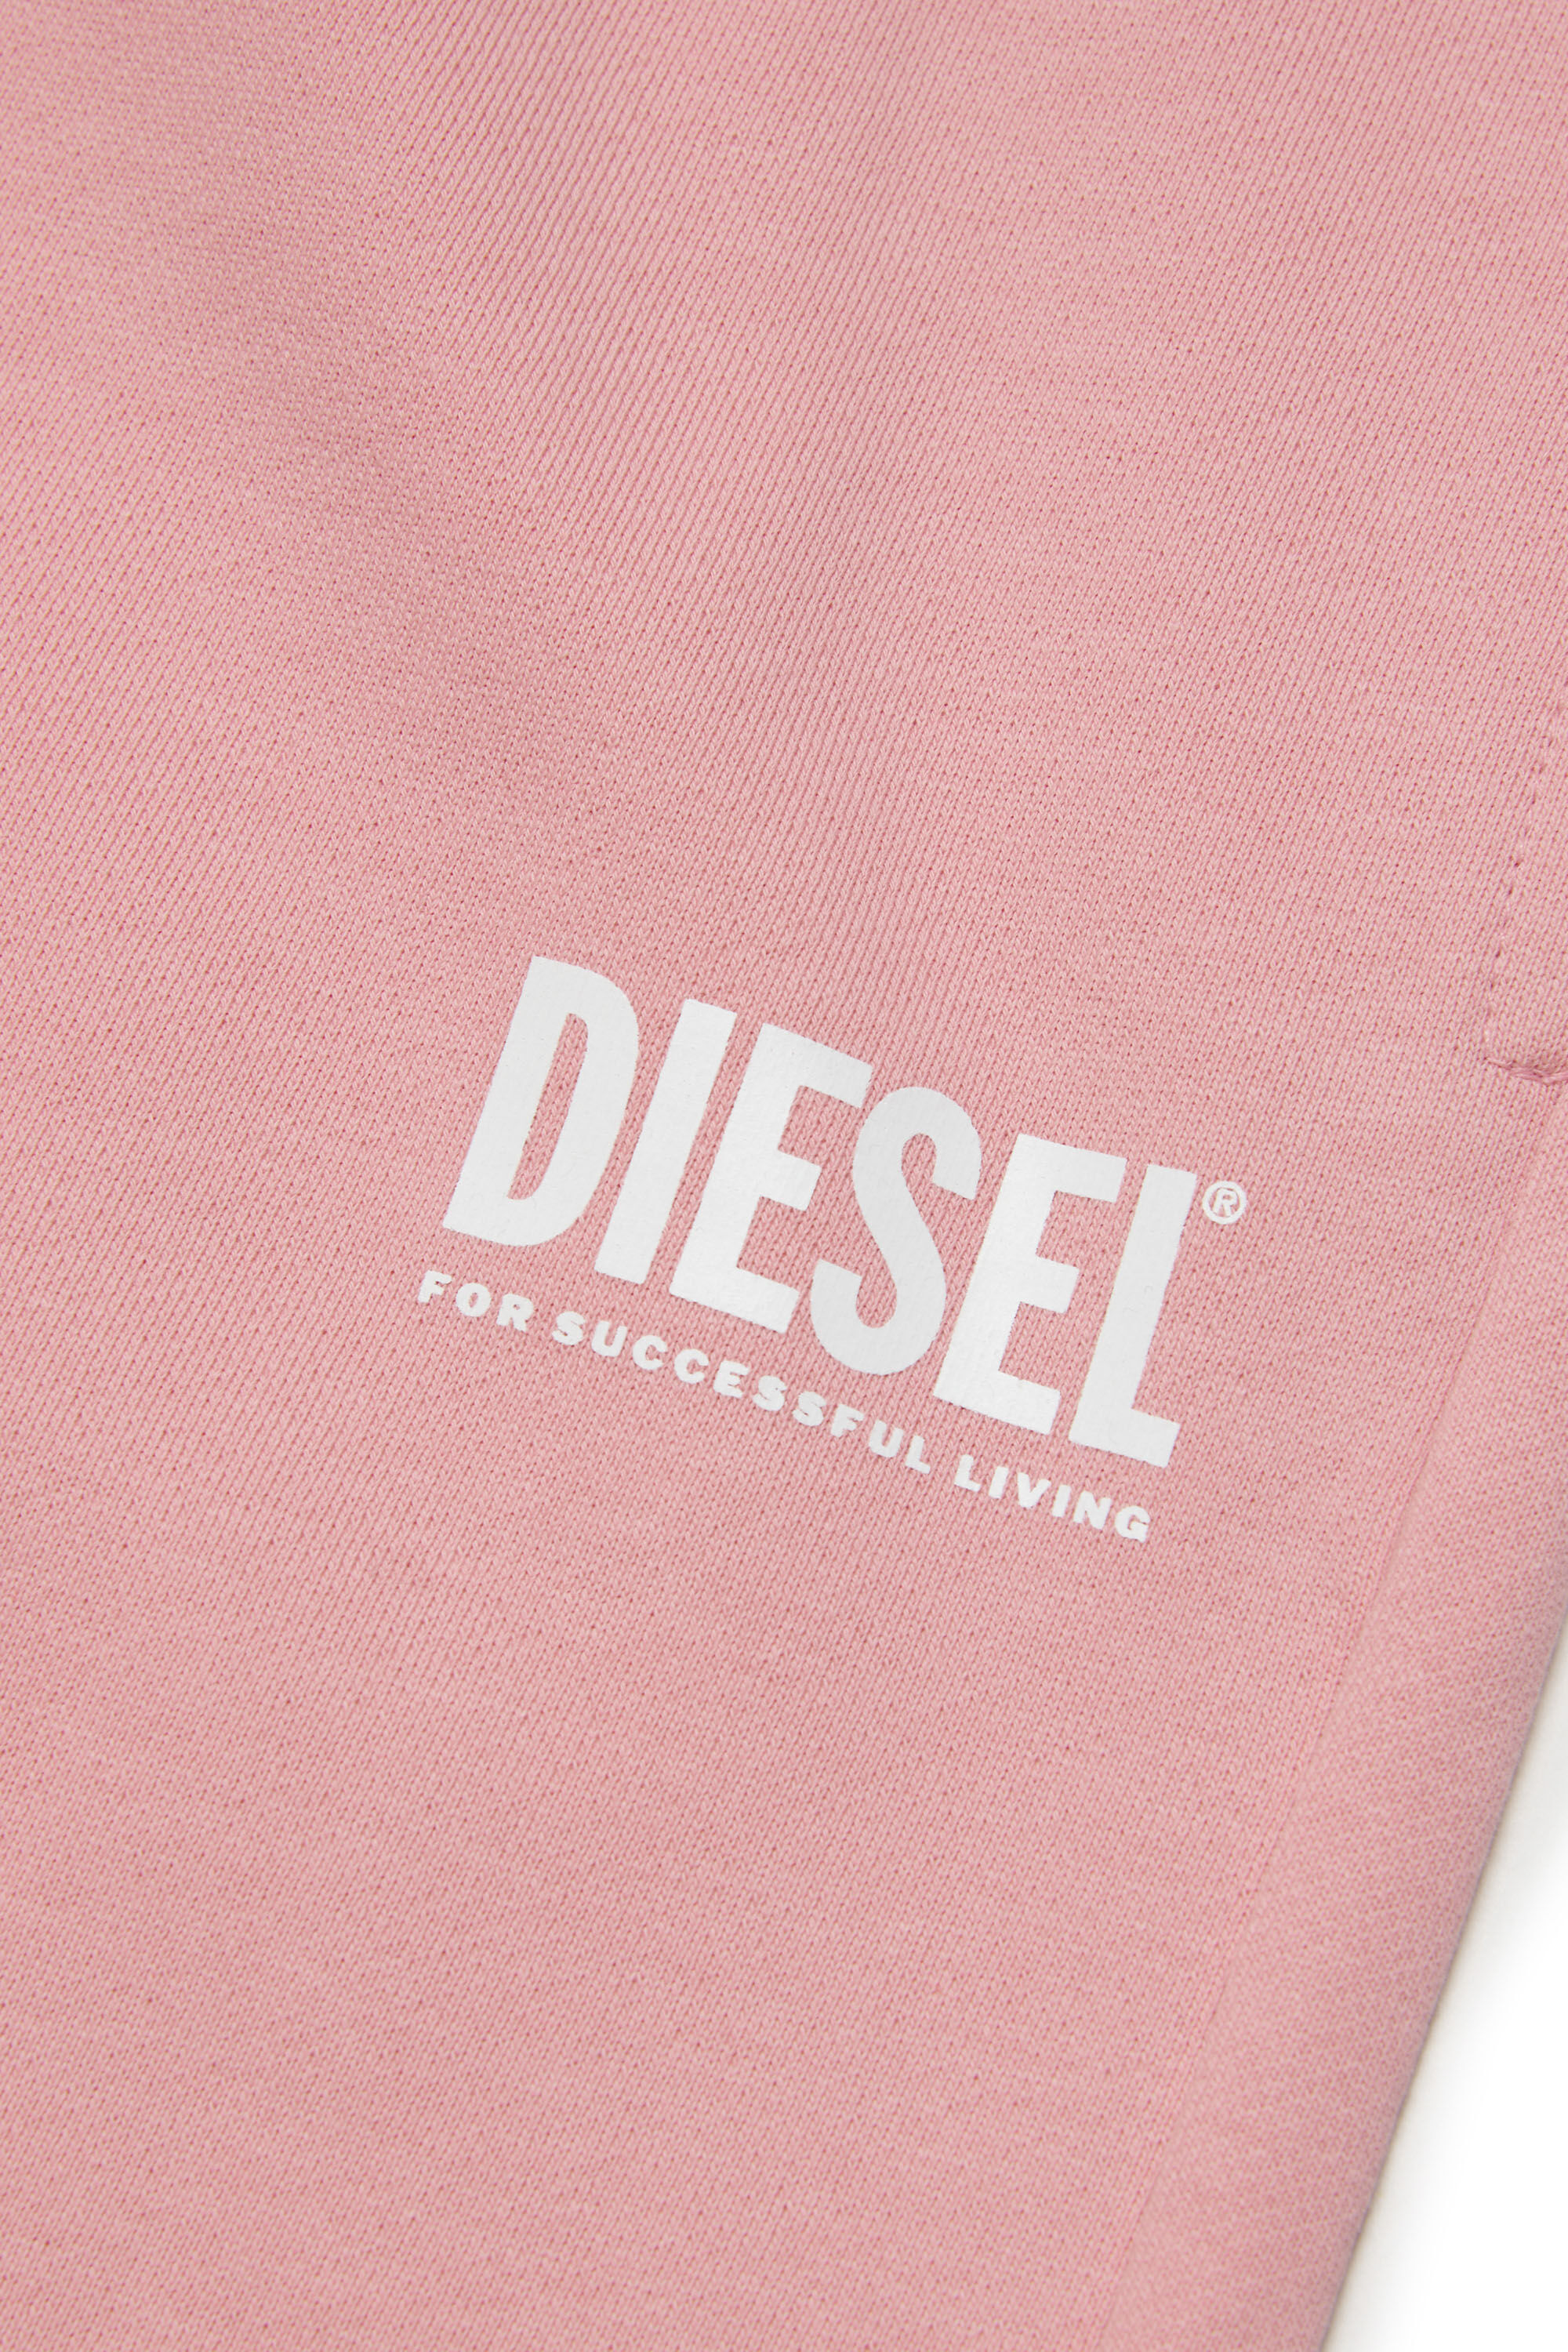 Diesel - LPENSIU DI, Pink - Image 3